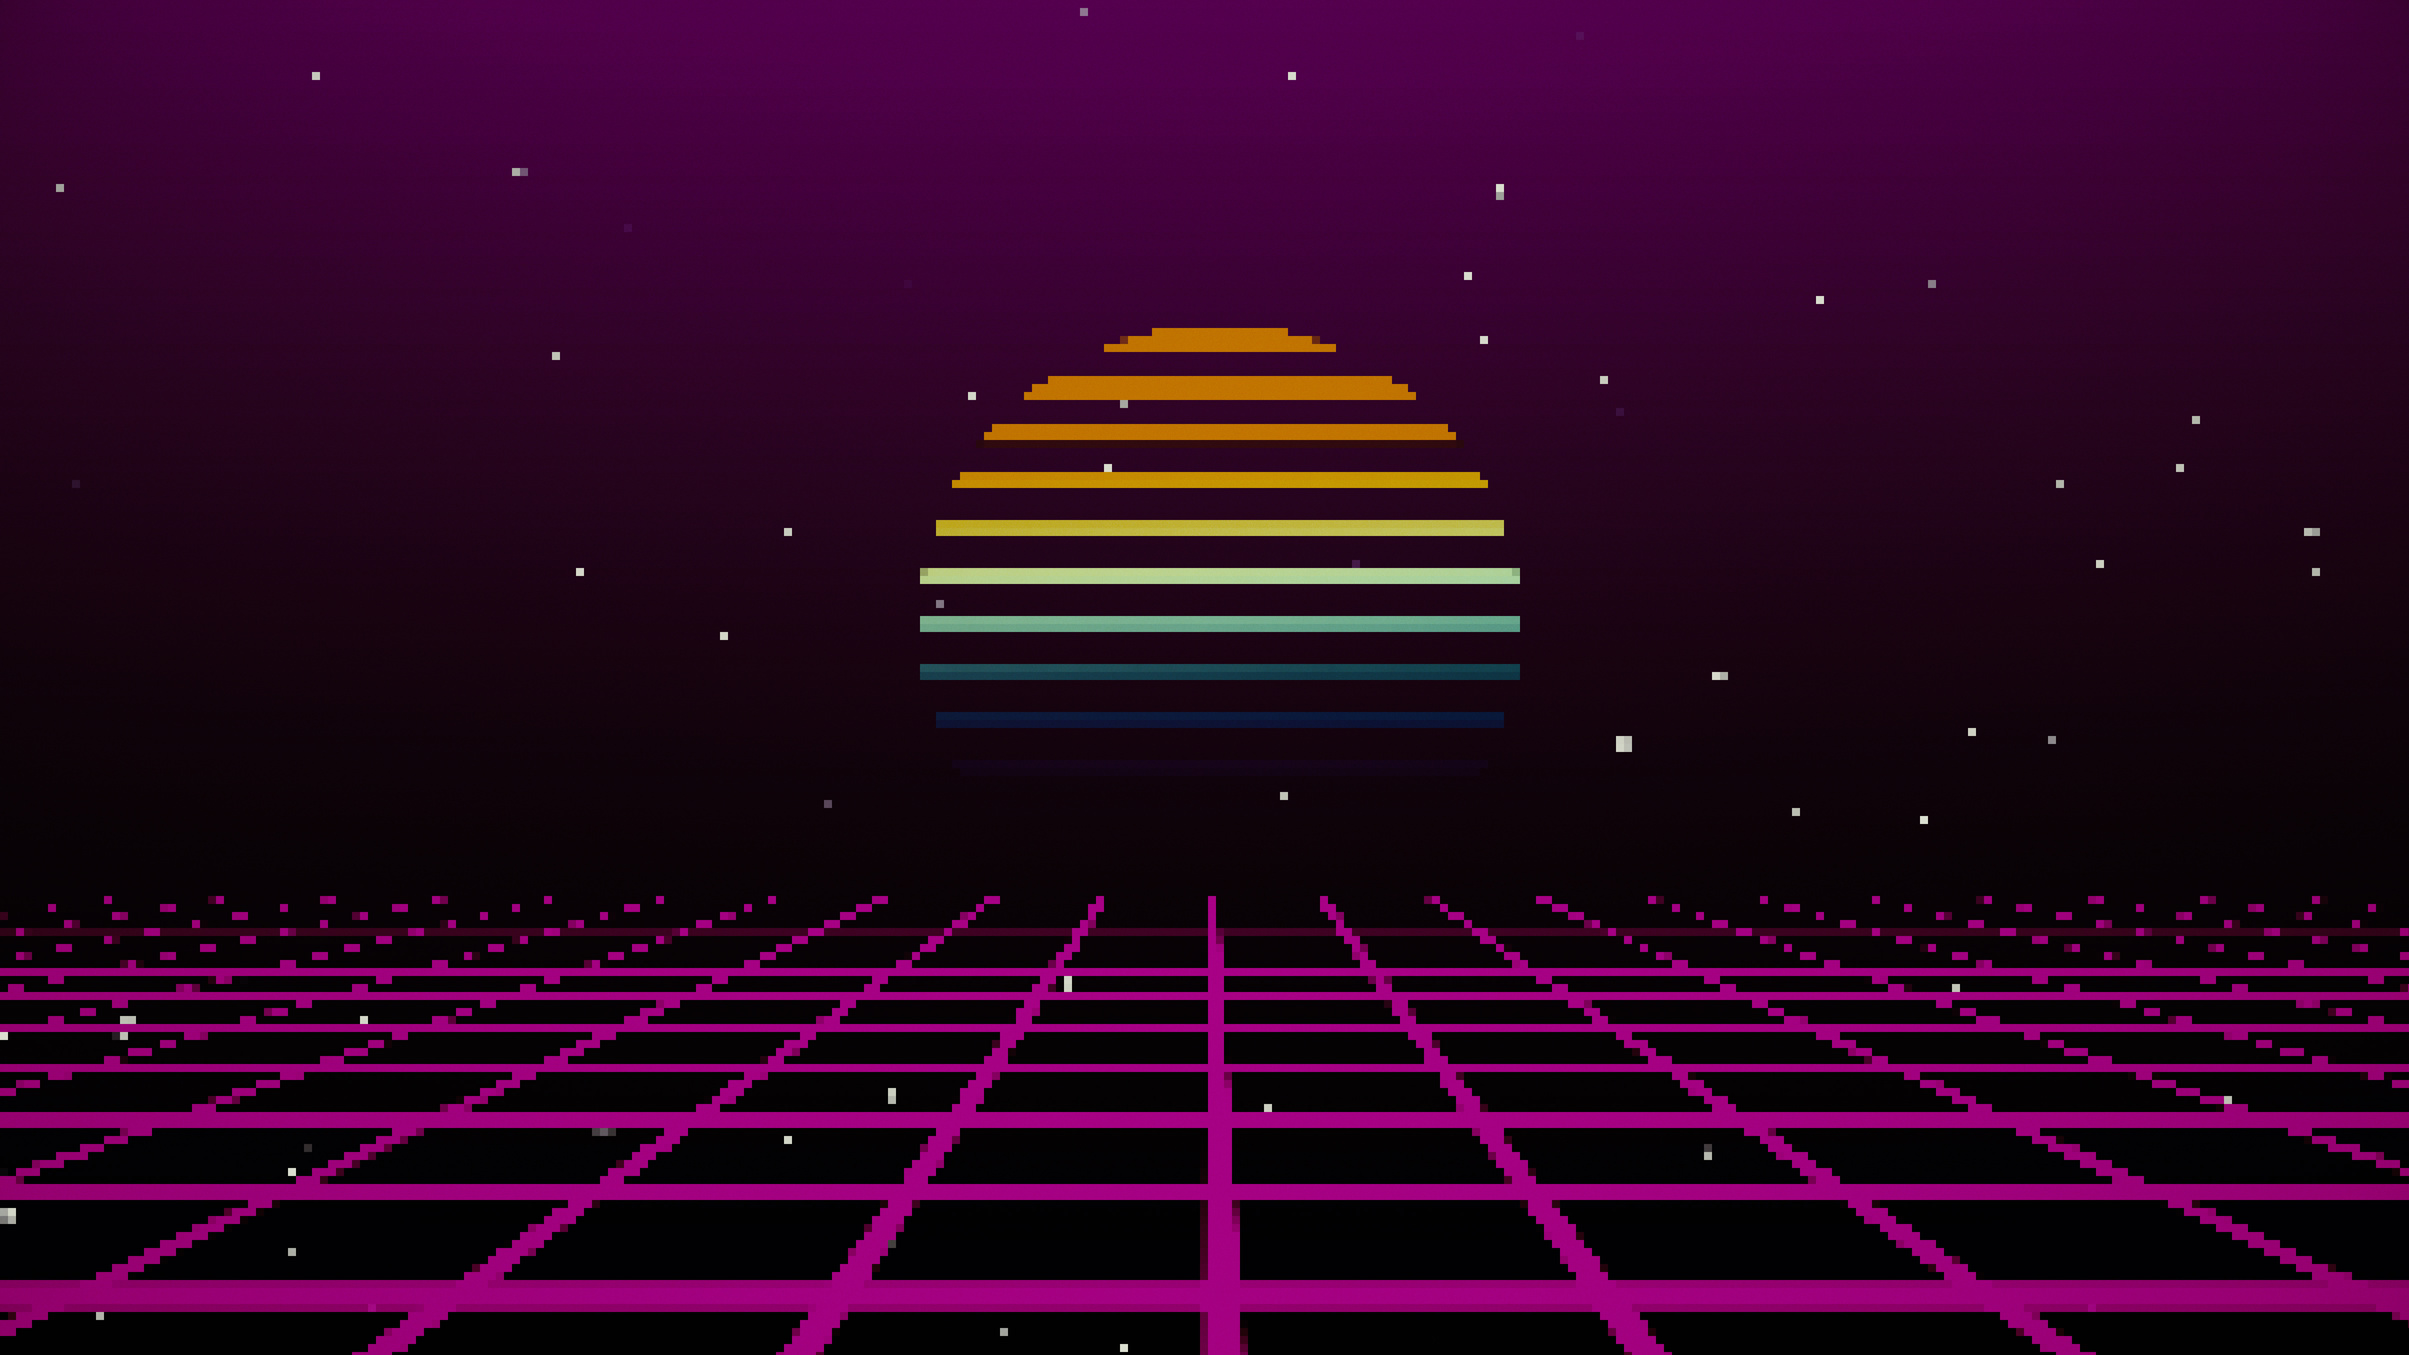 Retro Cyberpunk Style 80S Game Scene Pixel Art 8-Bit Sci-Fi 